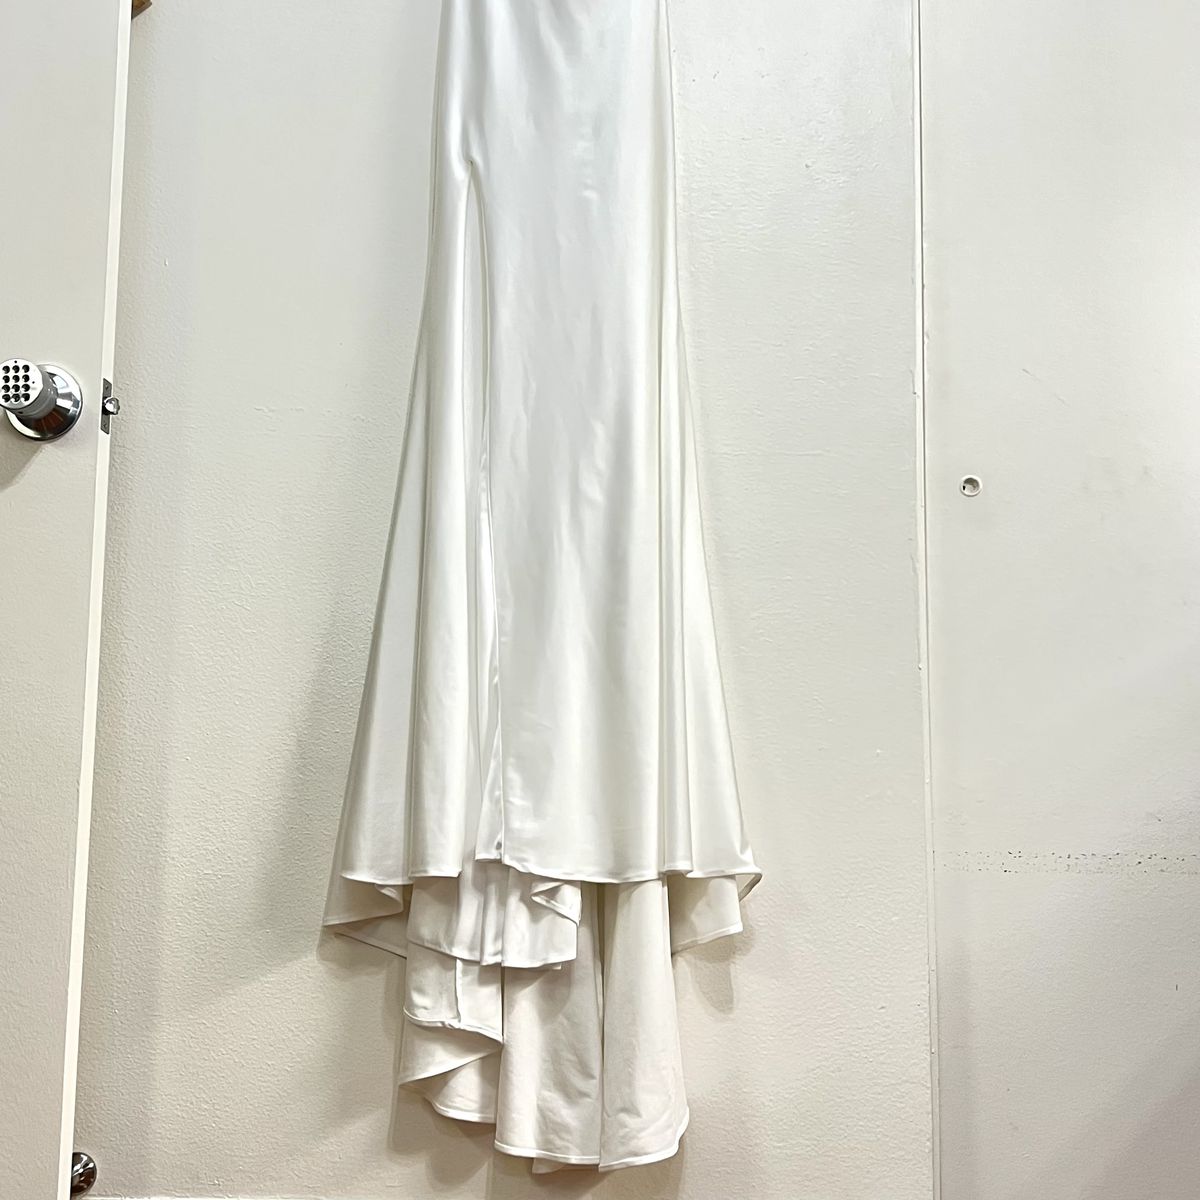 Style 28518 La Femme Size 6 White Side Slit Dress on Queenly